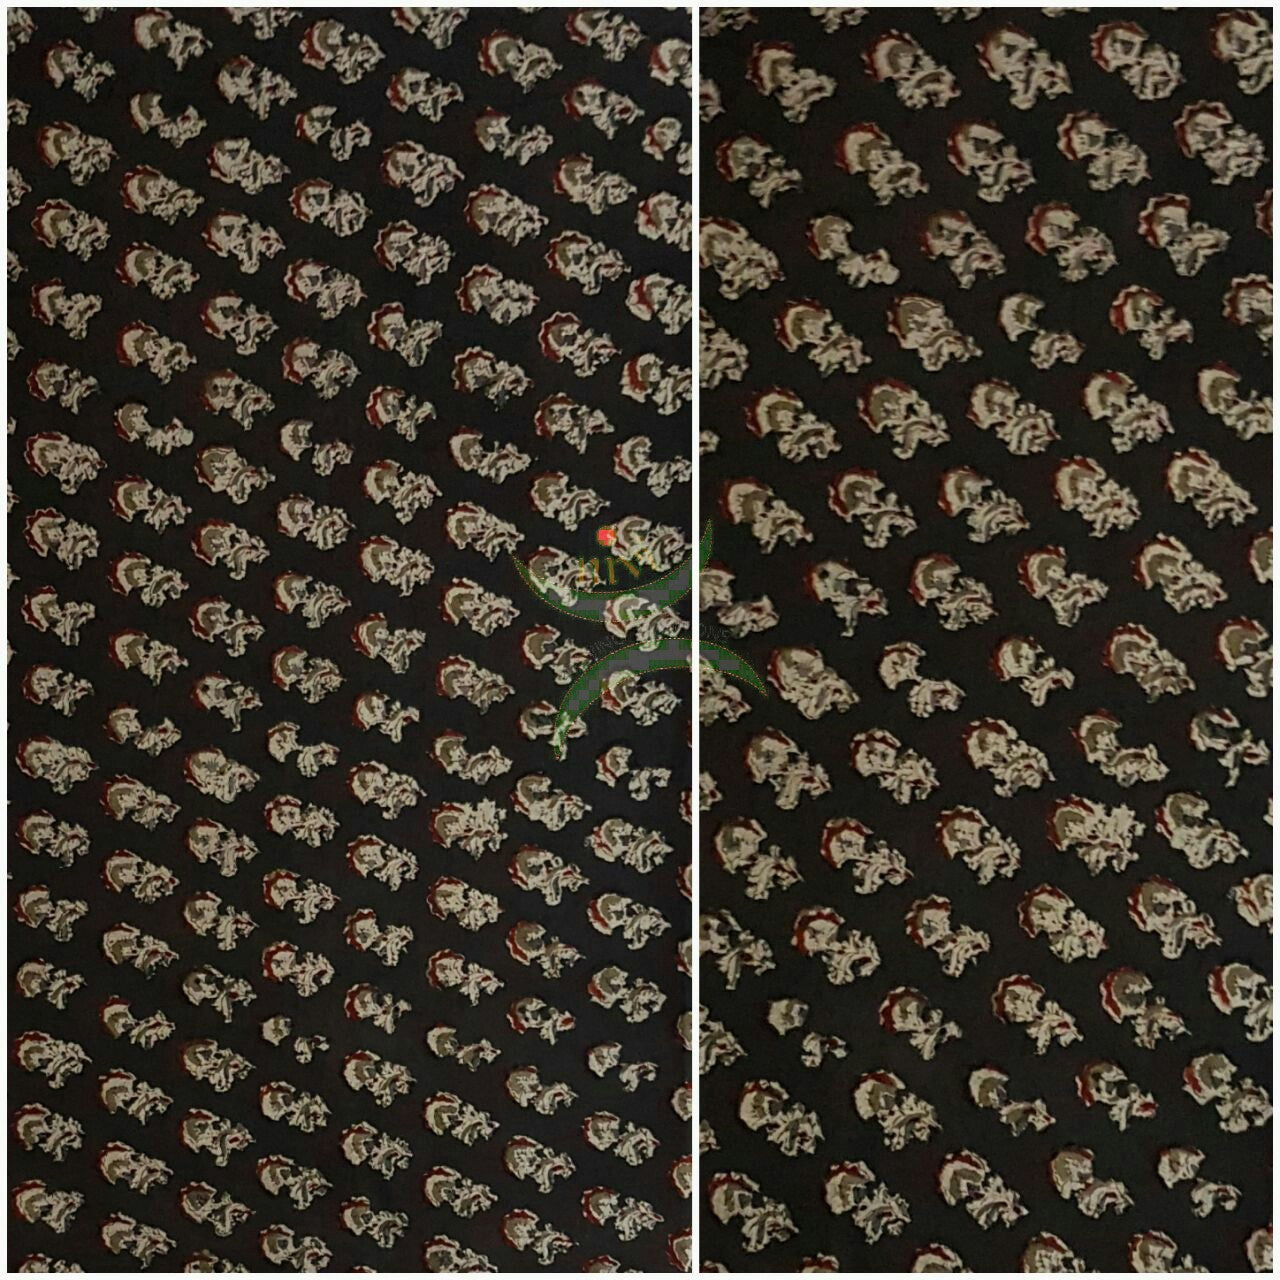 Black handwoven cotton kalamkari material with floral motifs.